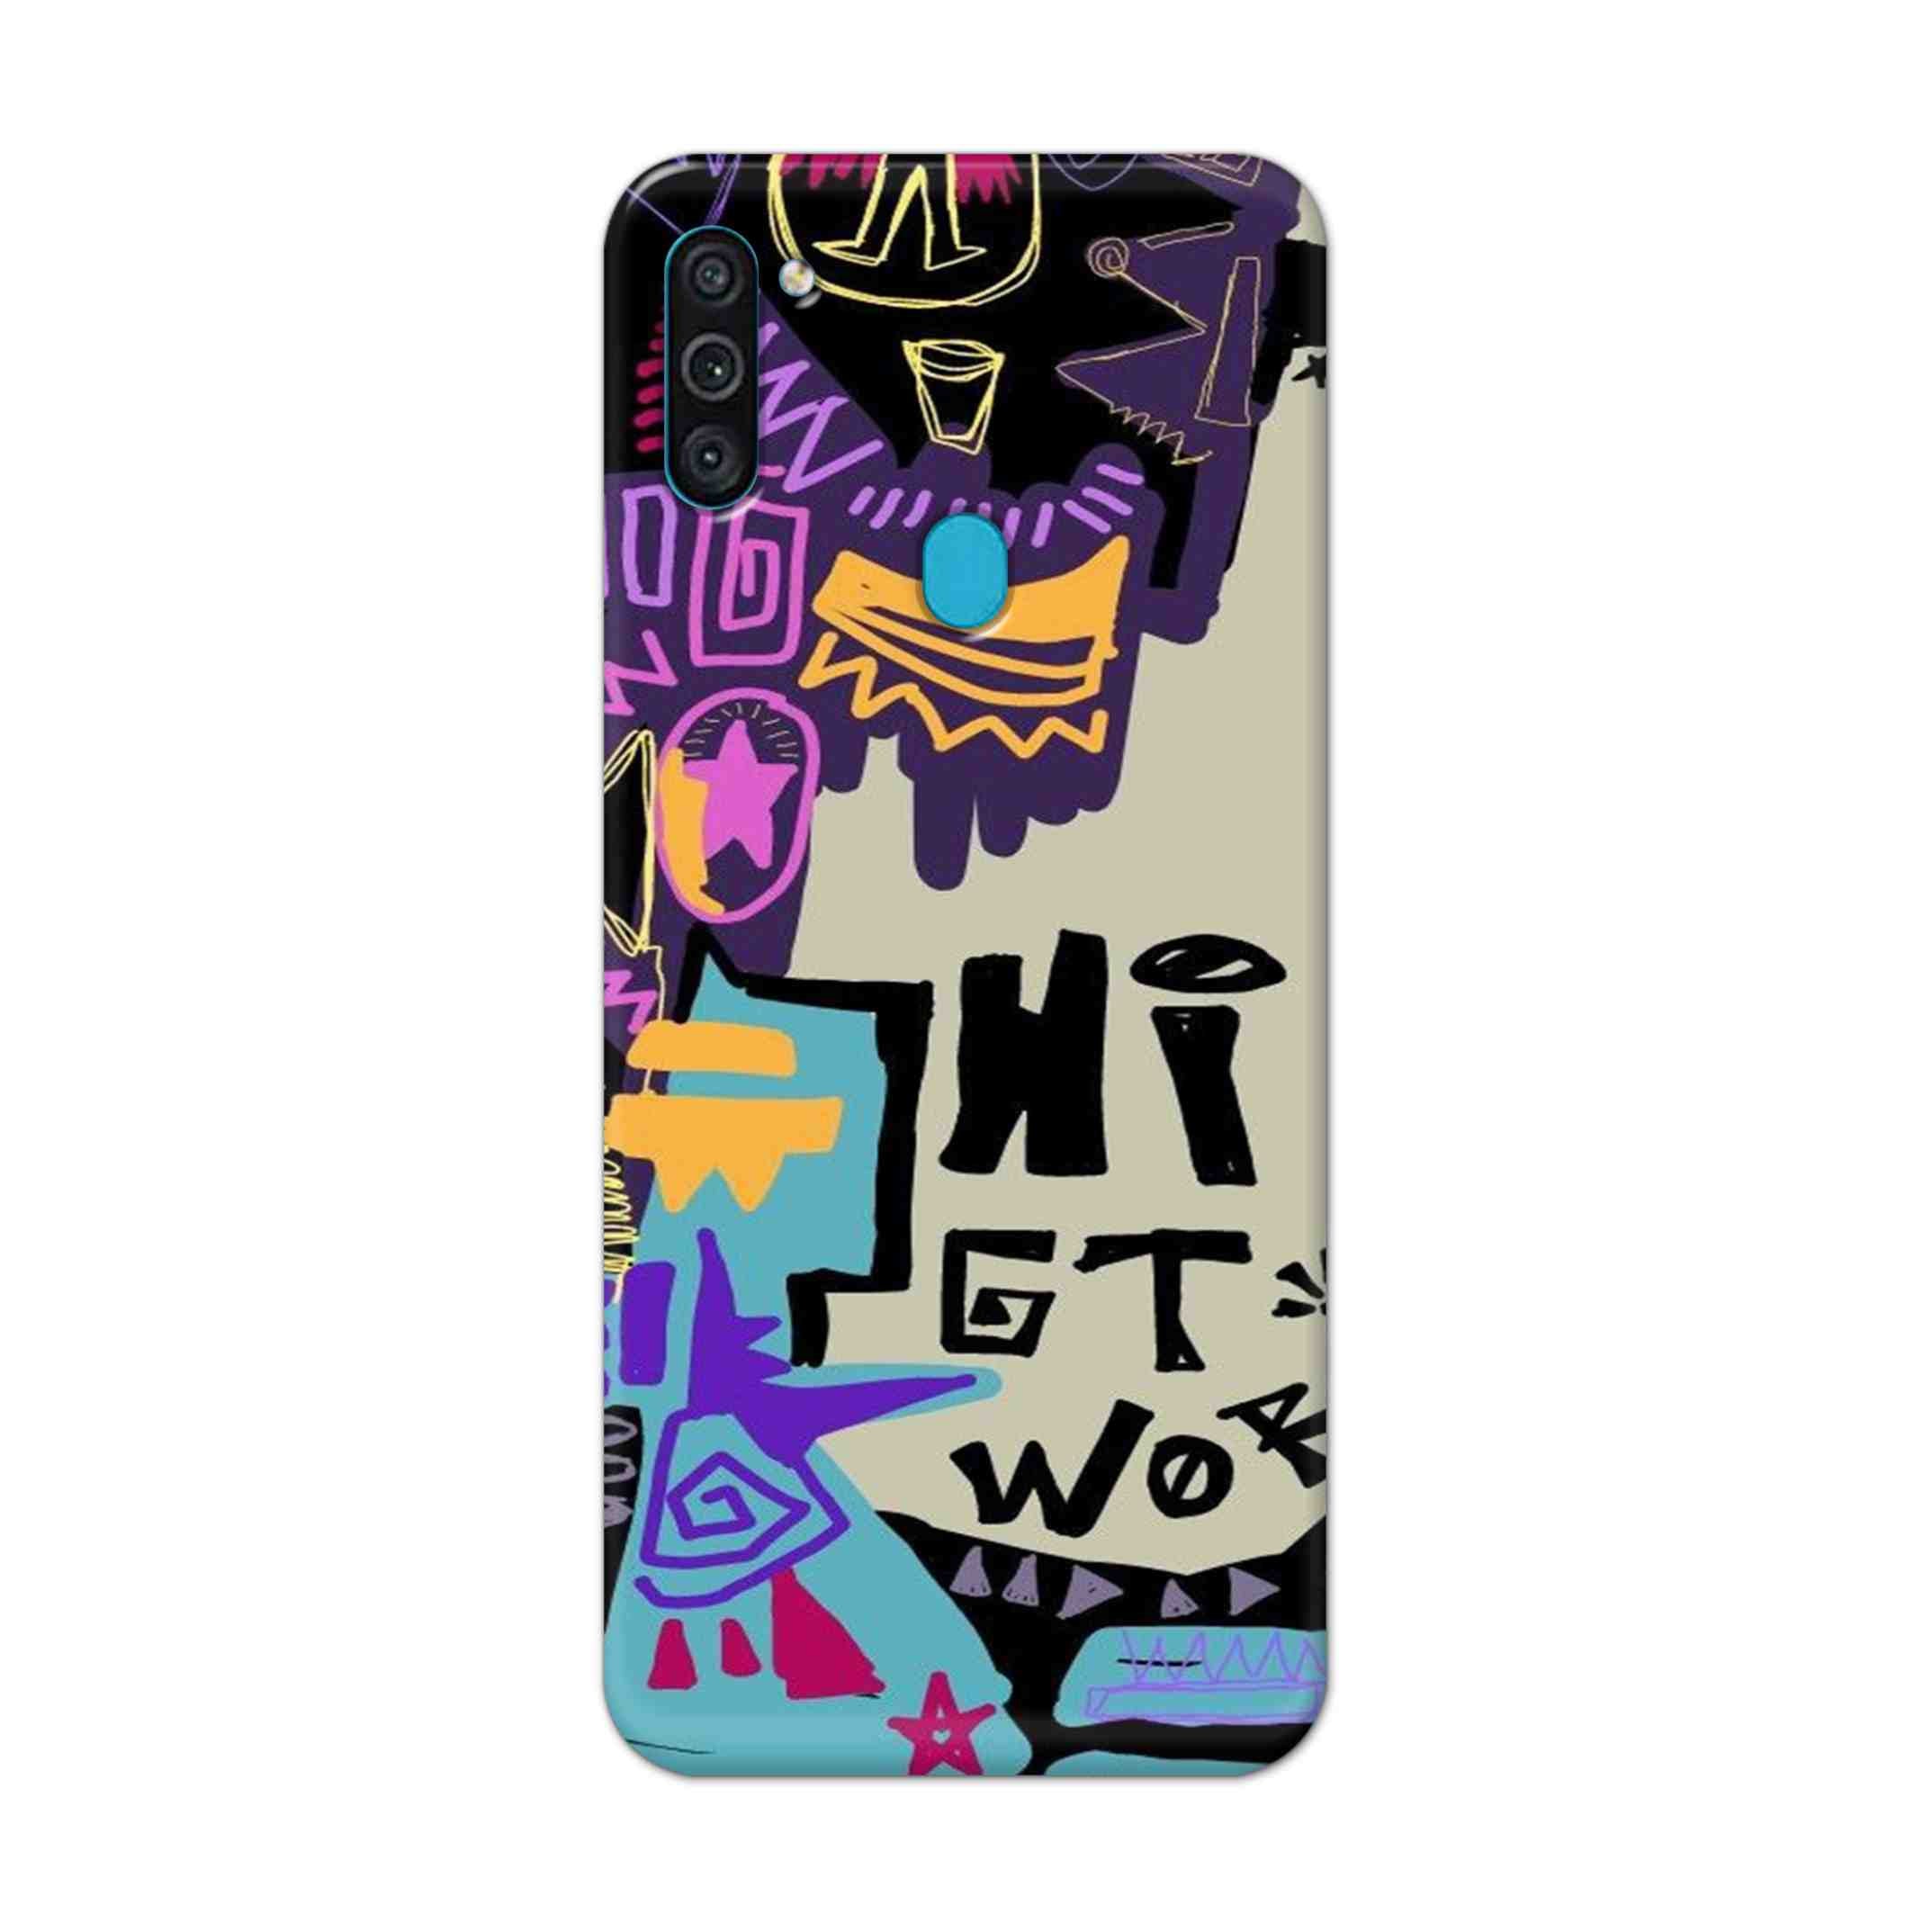 Buy Hi Gt World Hard Back Mobile Phone Case Cover For Samsung Galaxy M11 Online